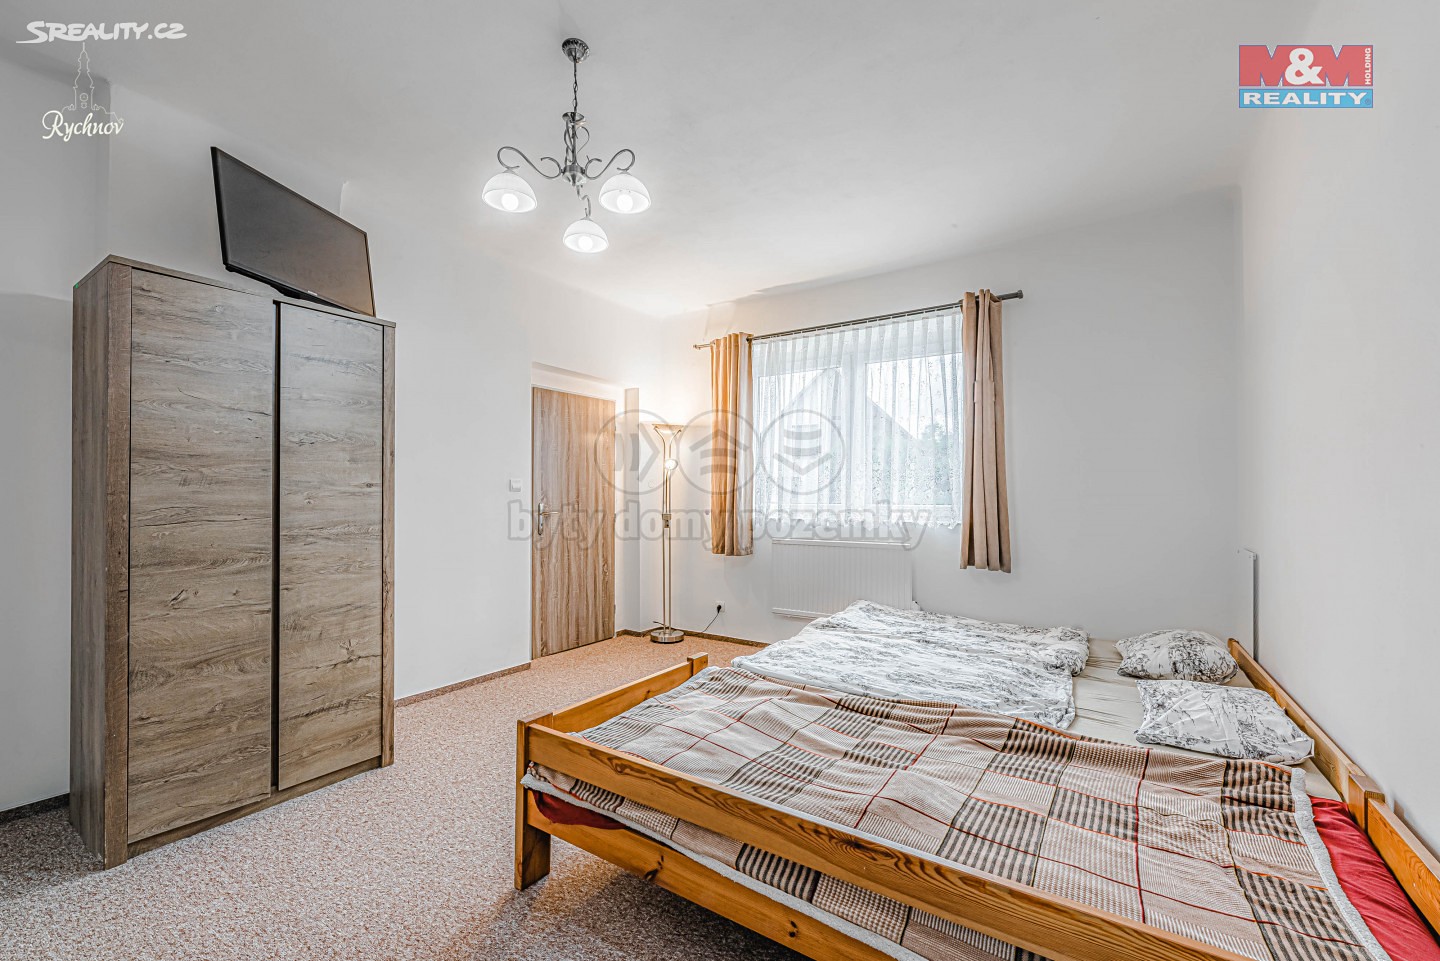 Prodej  rodinného domu 200 m², pozemek 299 m², Letohrad - Orlice, okres Ústí nad Orlicí